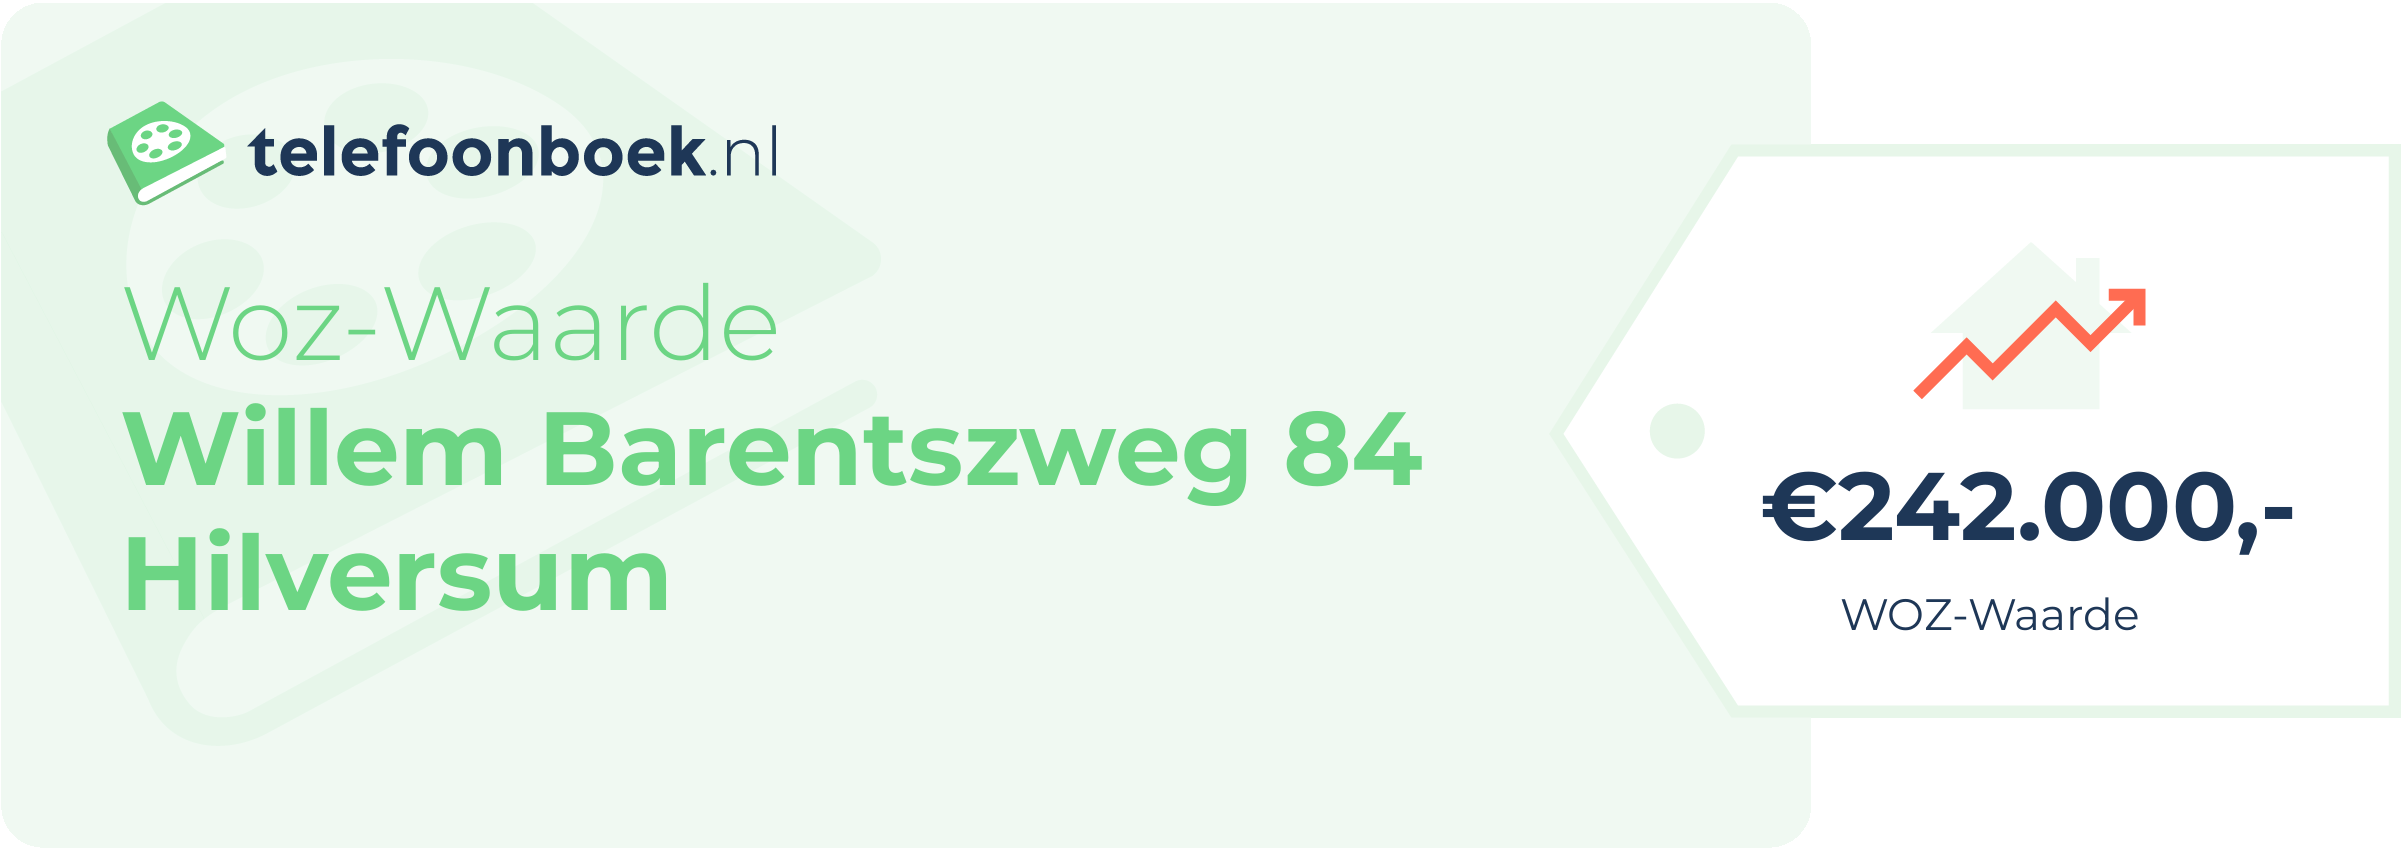 WOZ-waarde Willem Barentszweg 84 Hilversum